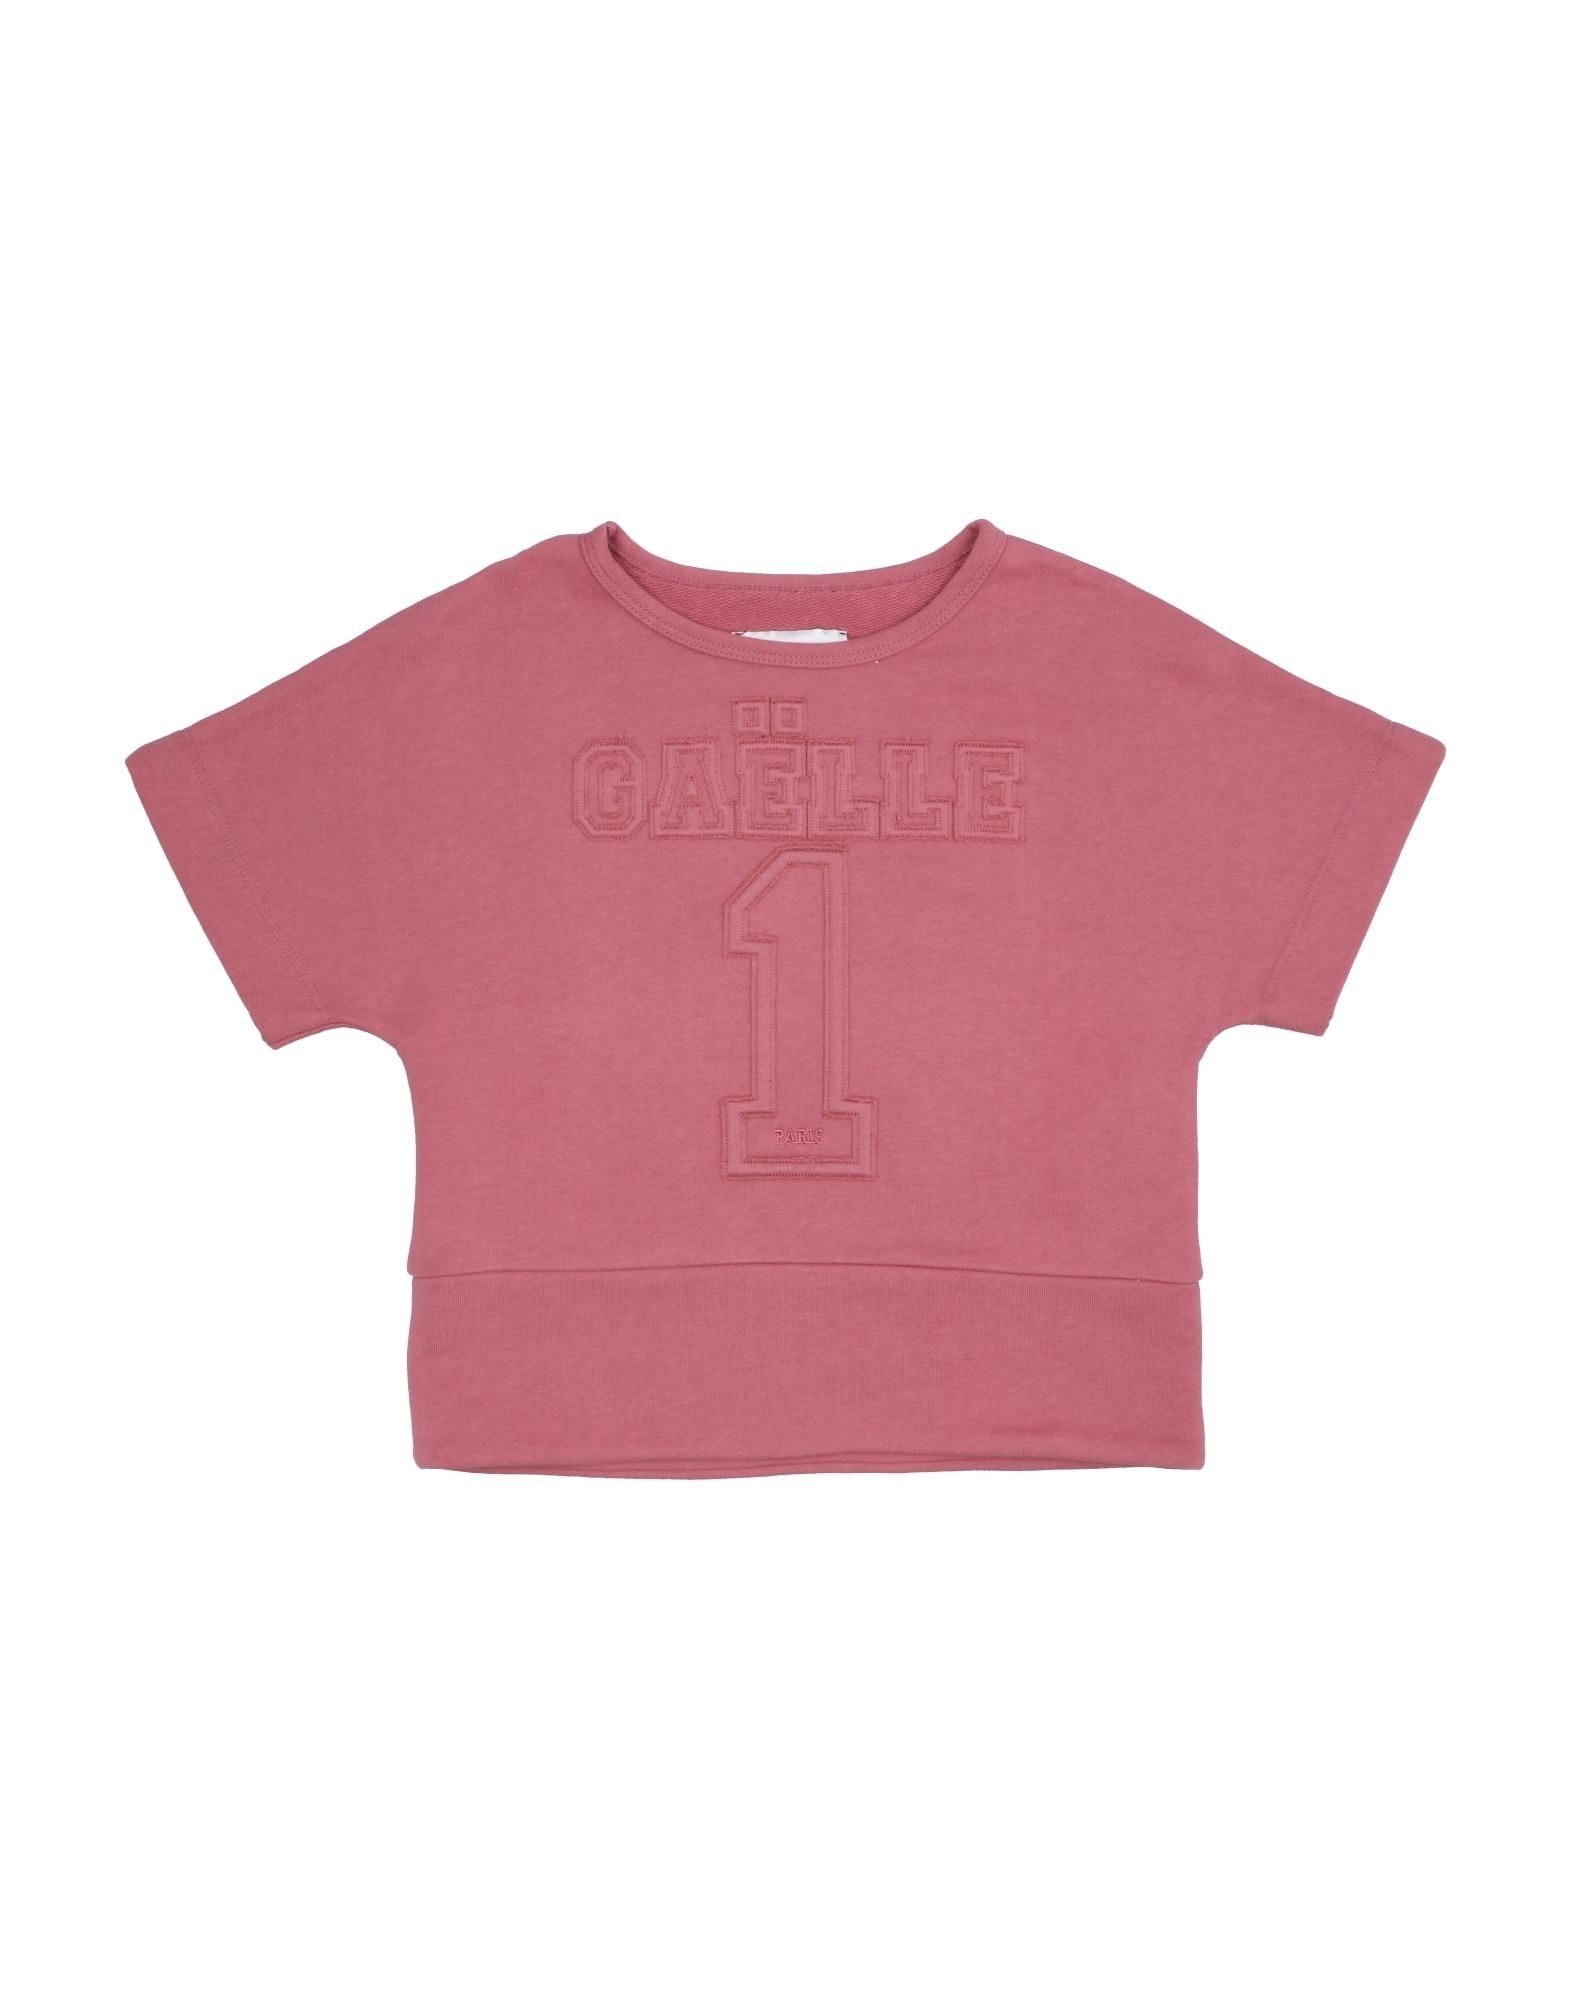 Gaelle Paris Kids' Sweatshirts In Pastel Pink